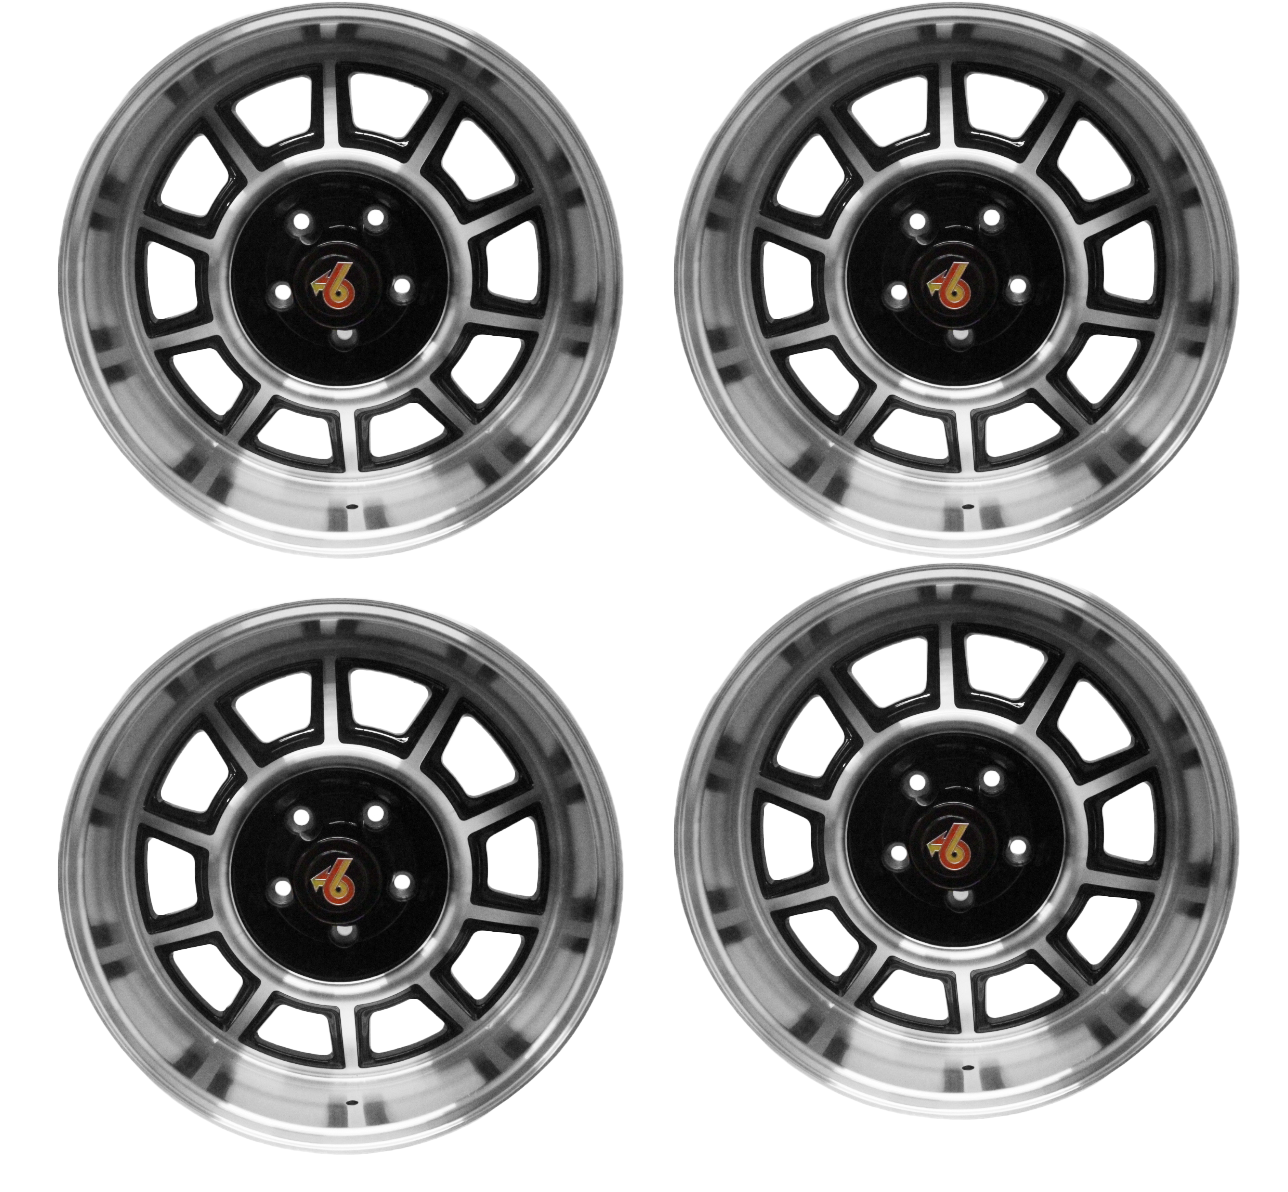 Grand National 18" x 9.5" Aluminum Wheels Rims (Set of 4)